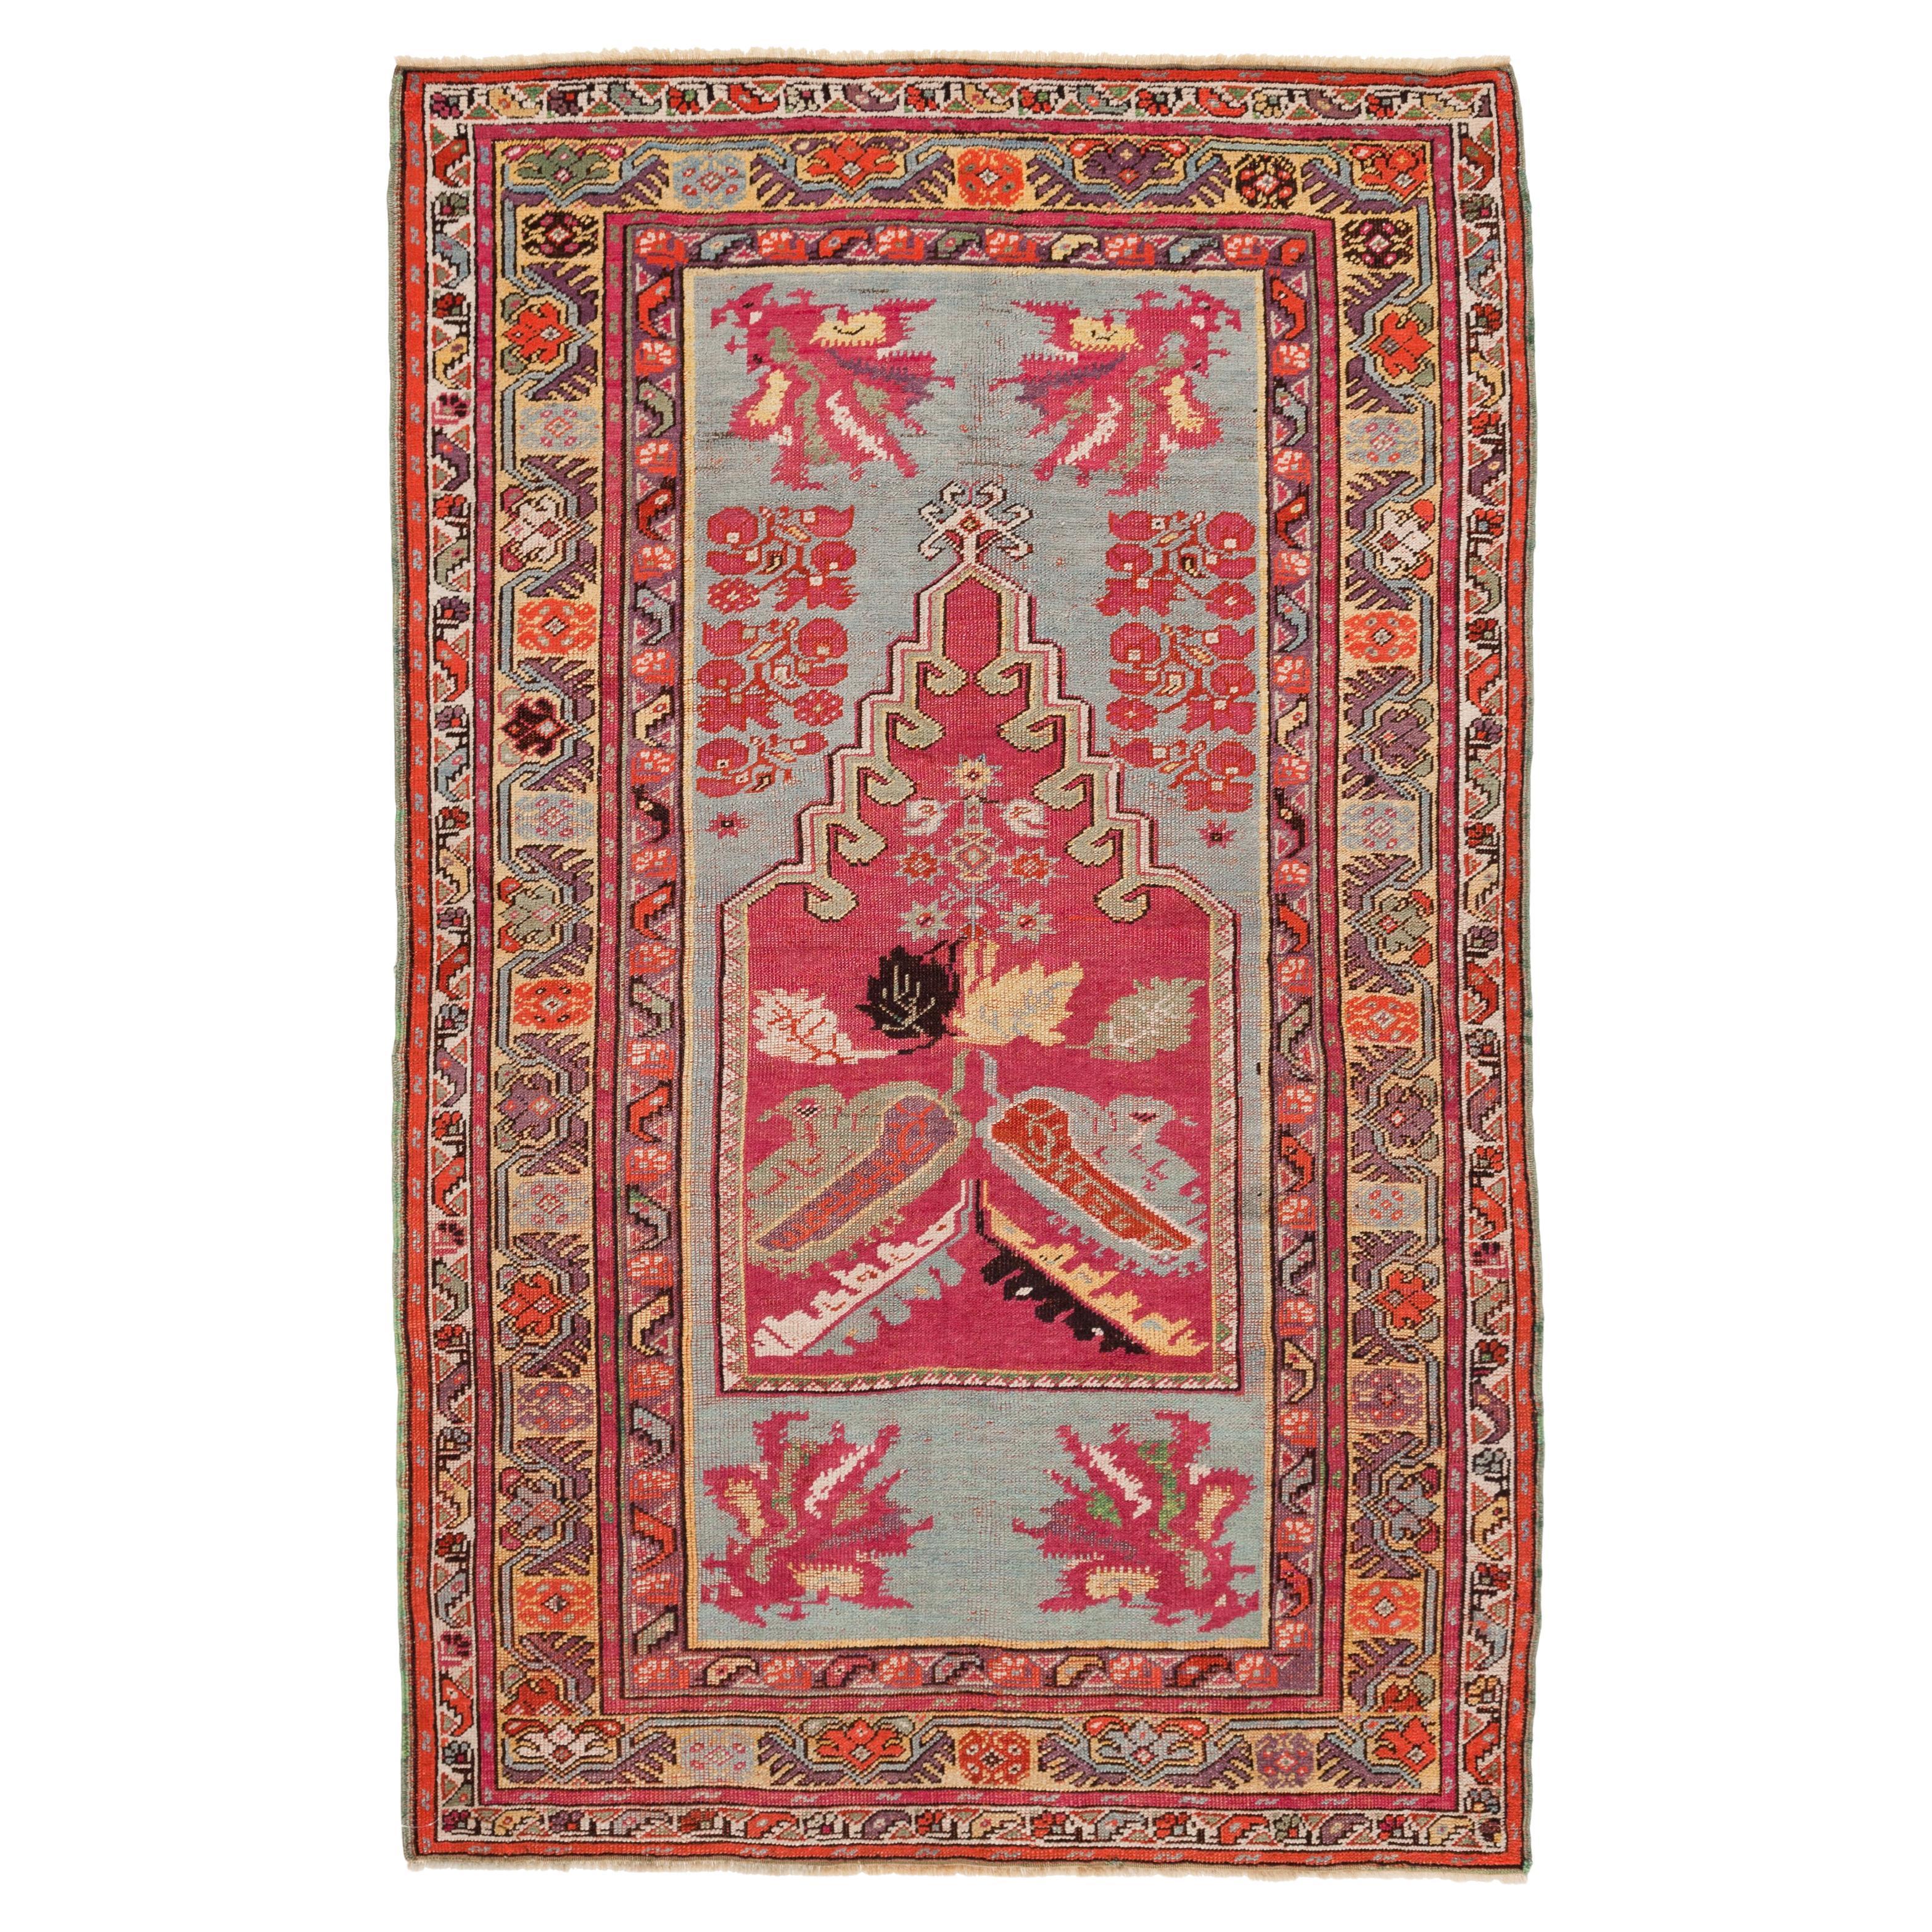 Antique Mucur 'Mudjar / Mujur' Prayer Rug, Turkish Central Anatolian Carpet